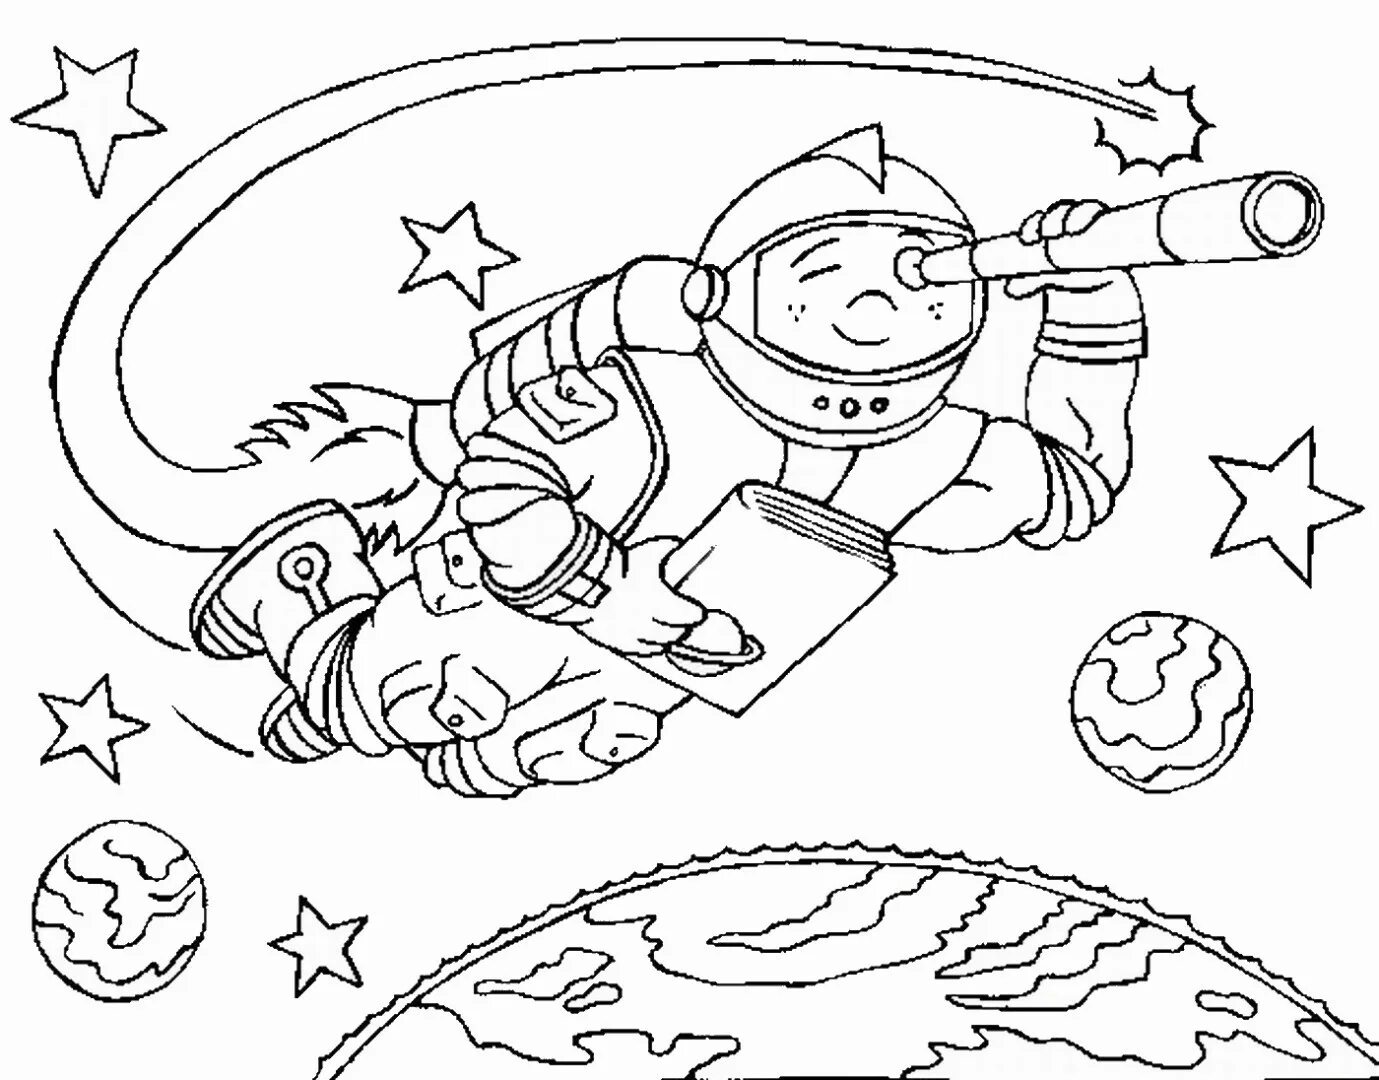 Рисунок на тему космос раскраска. Раскраска. В космосе. Космос раскраска для детей. Космонавт раскраска для детей. Раскраски ко Дню космонавтики.